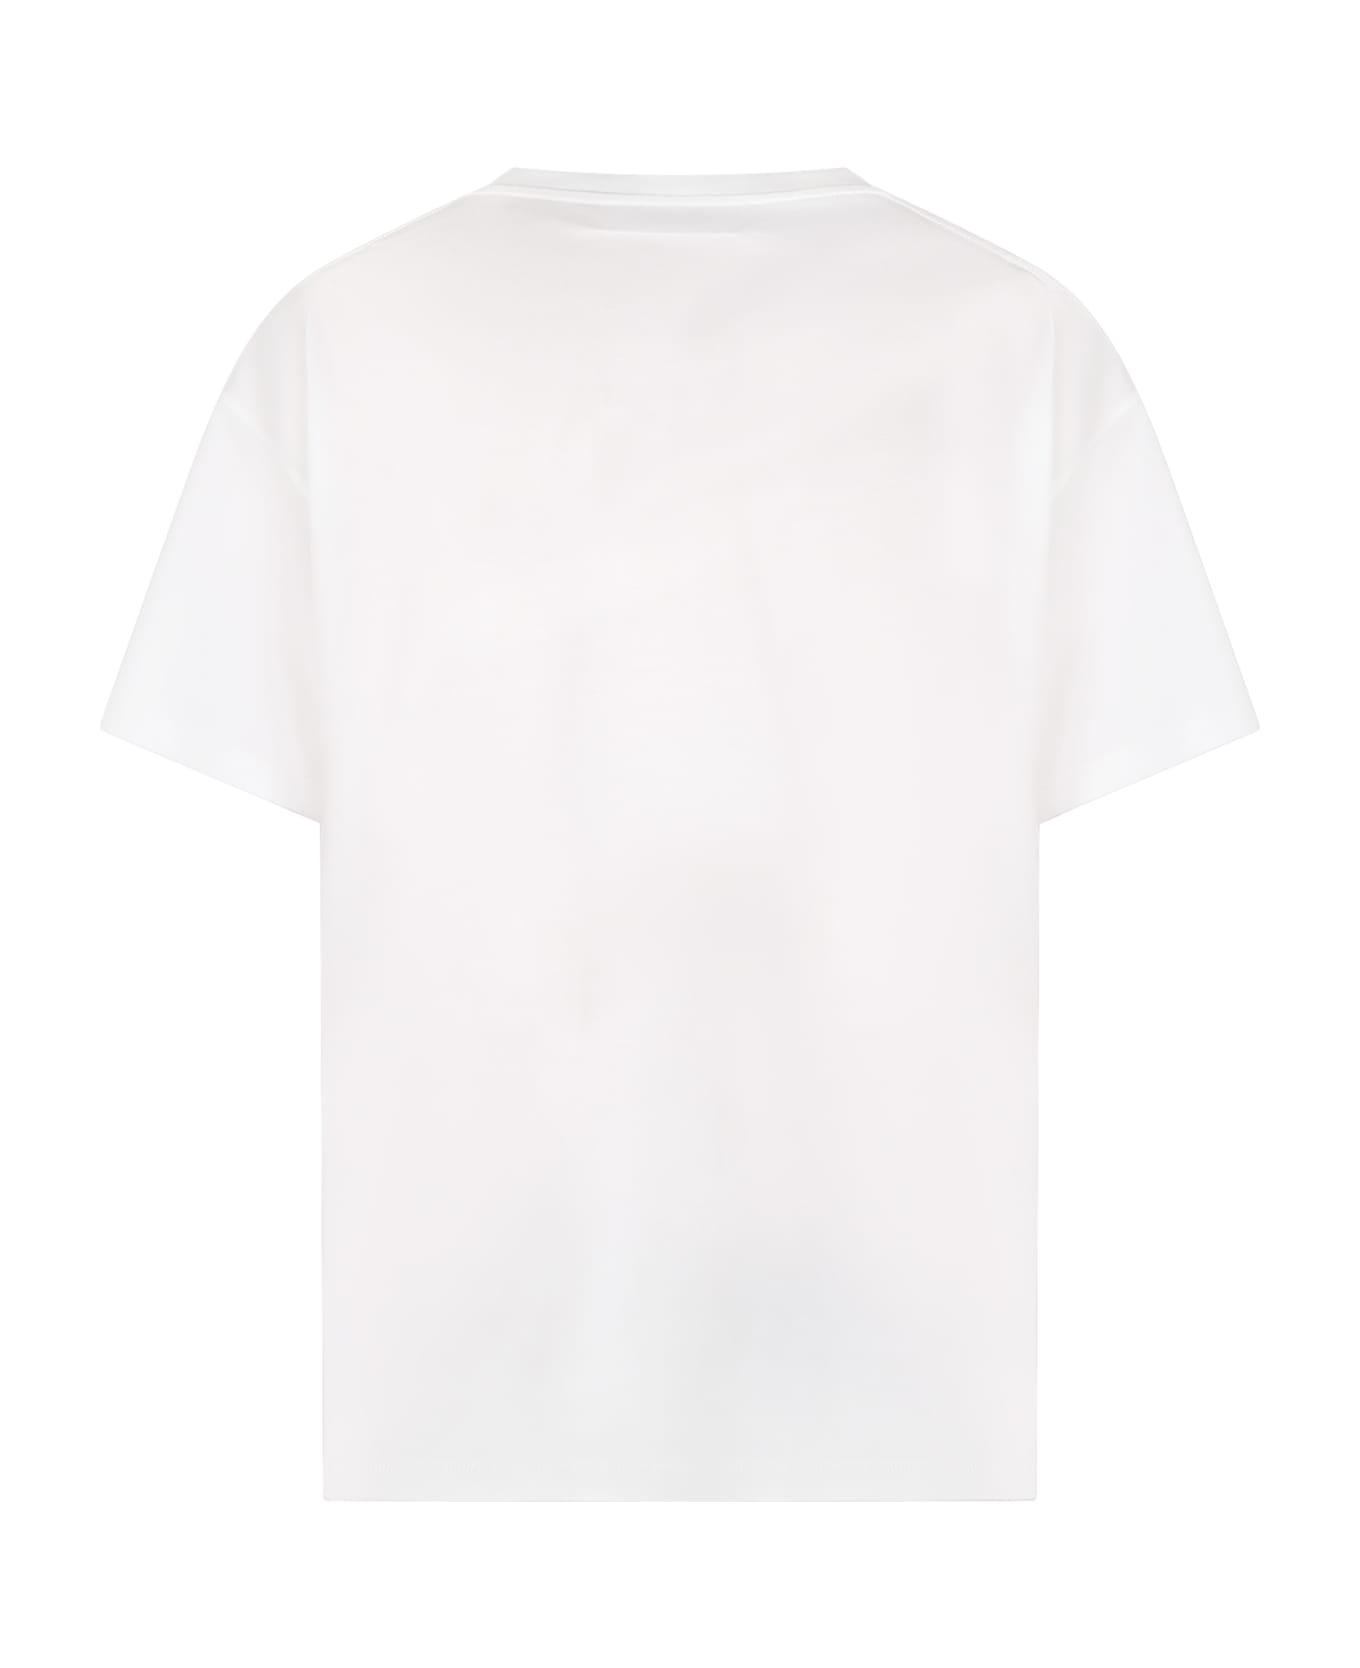 MM6 Maison Margiela White T-shirt For Kids With Logo - White